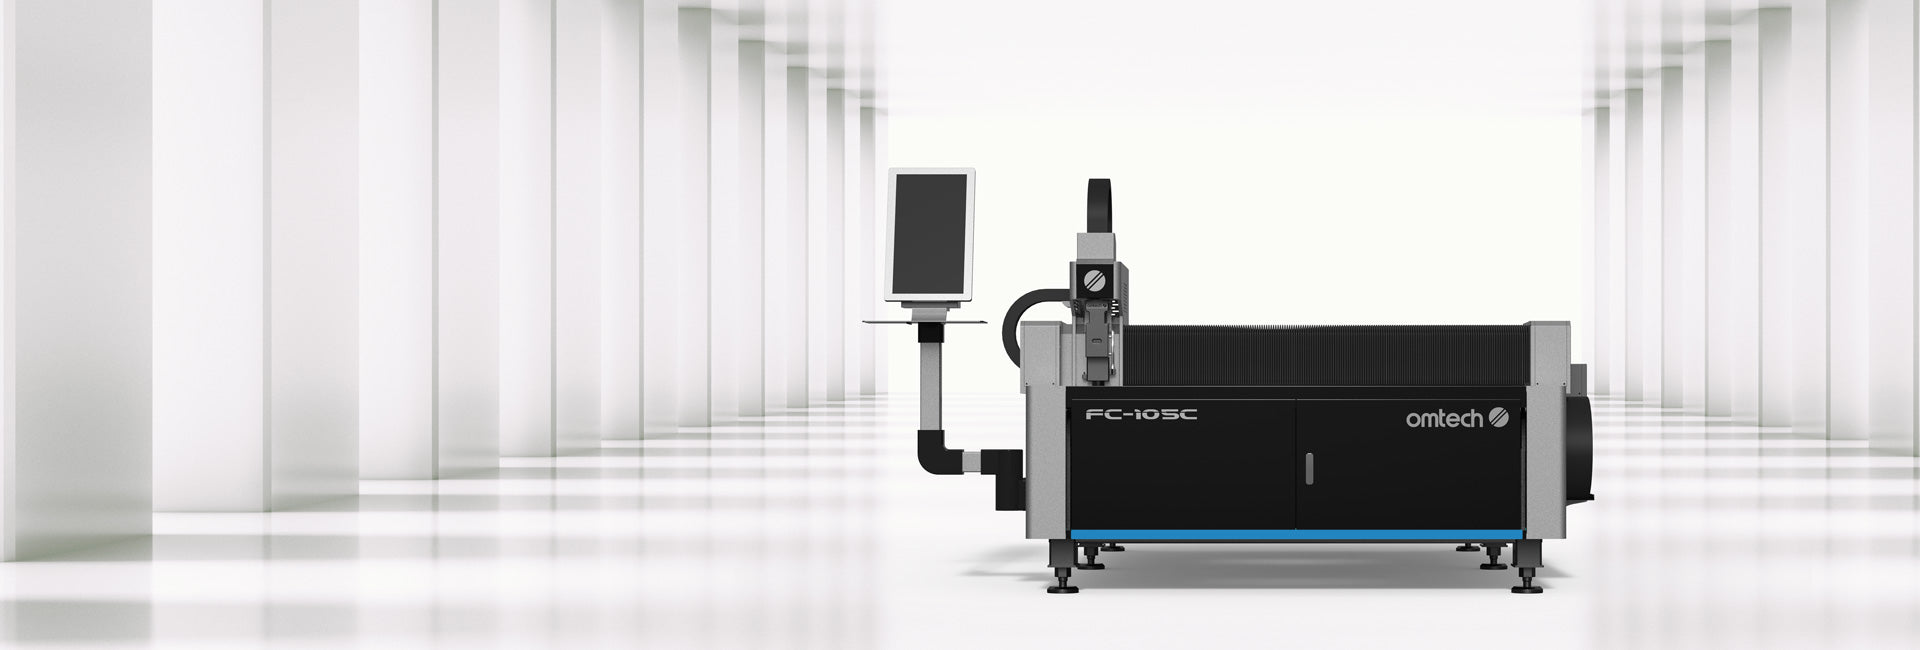 OMTech FC-105C, Fiber Laser, laser cutting machine, lazer engraver